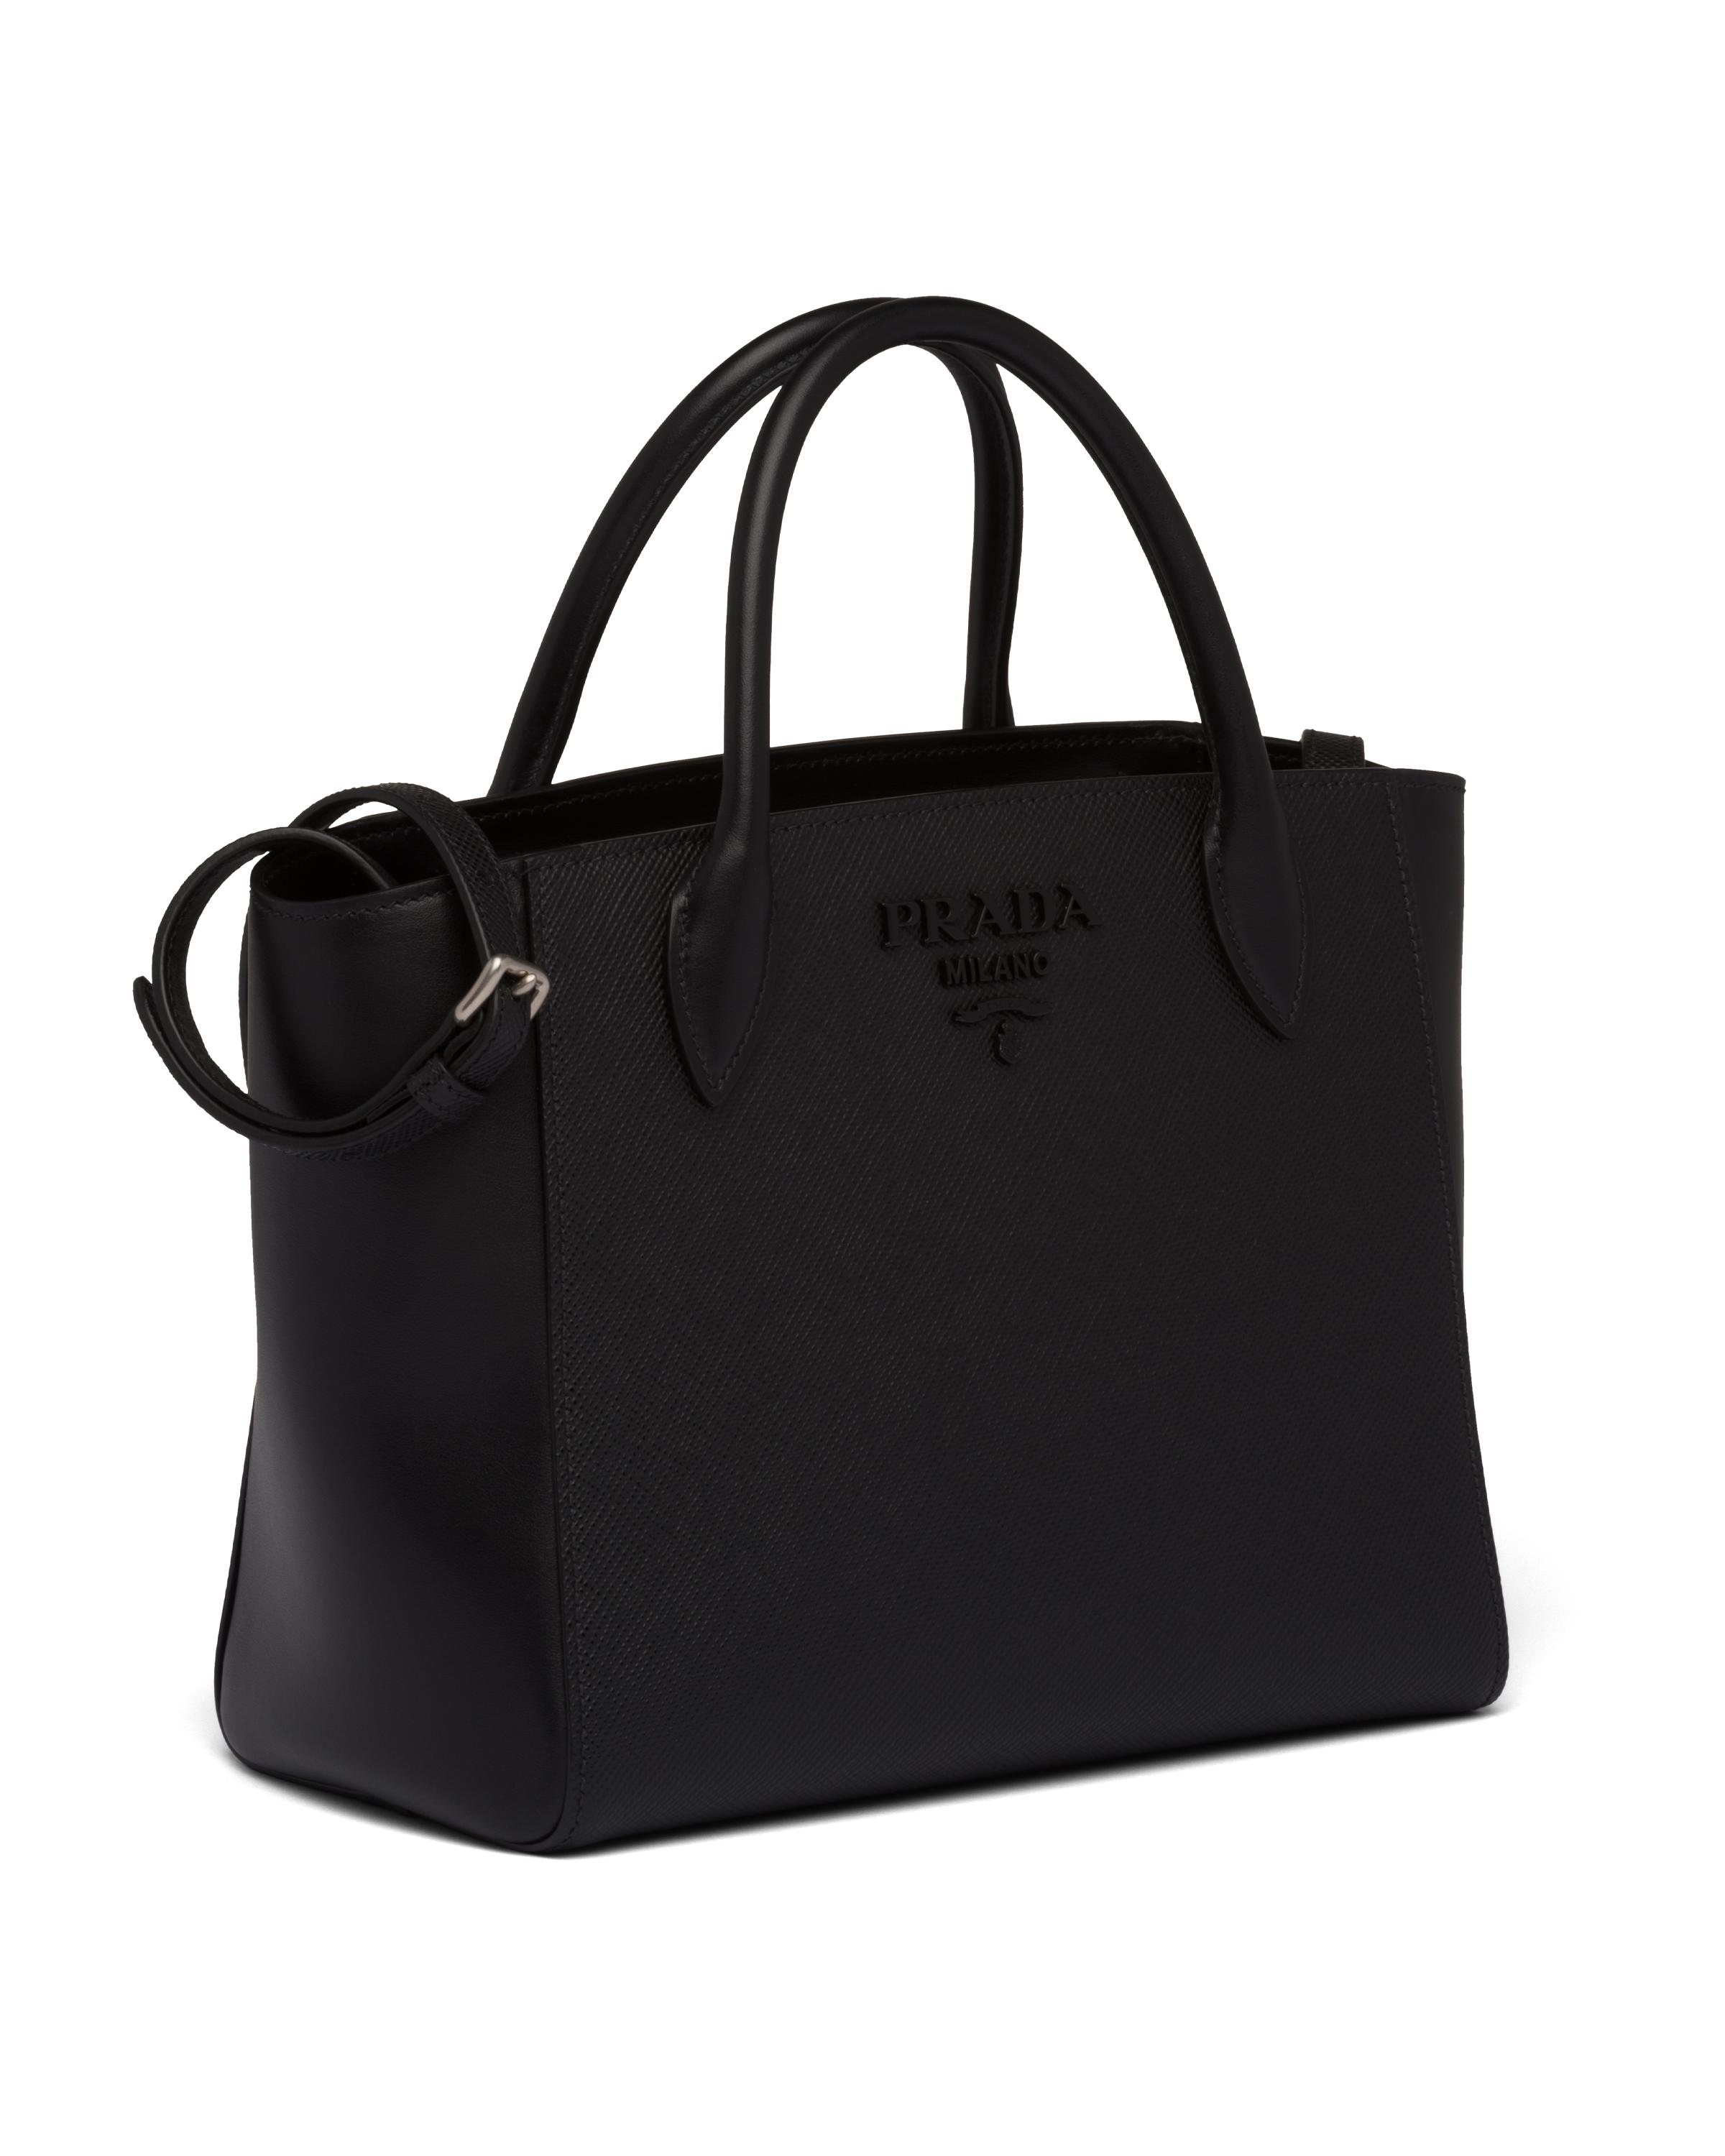 Prada Synthetic Monochrome Handbag in Black - Lyst